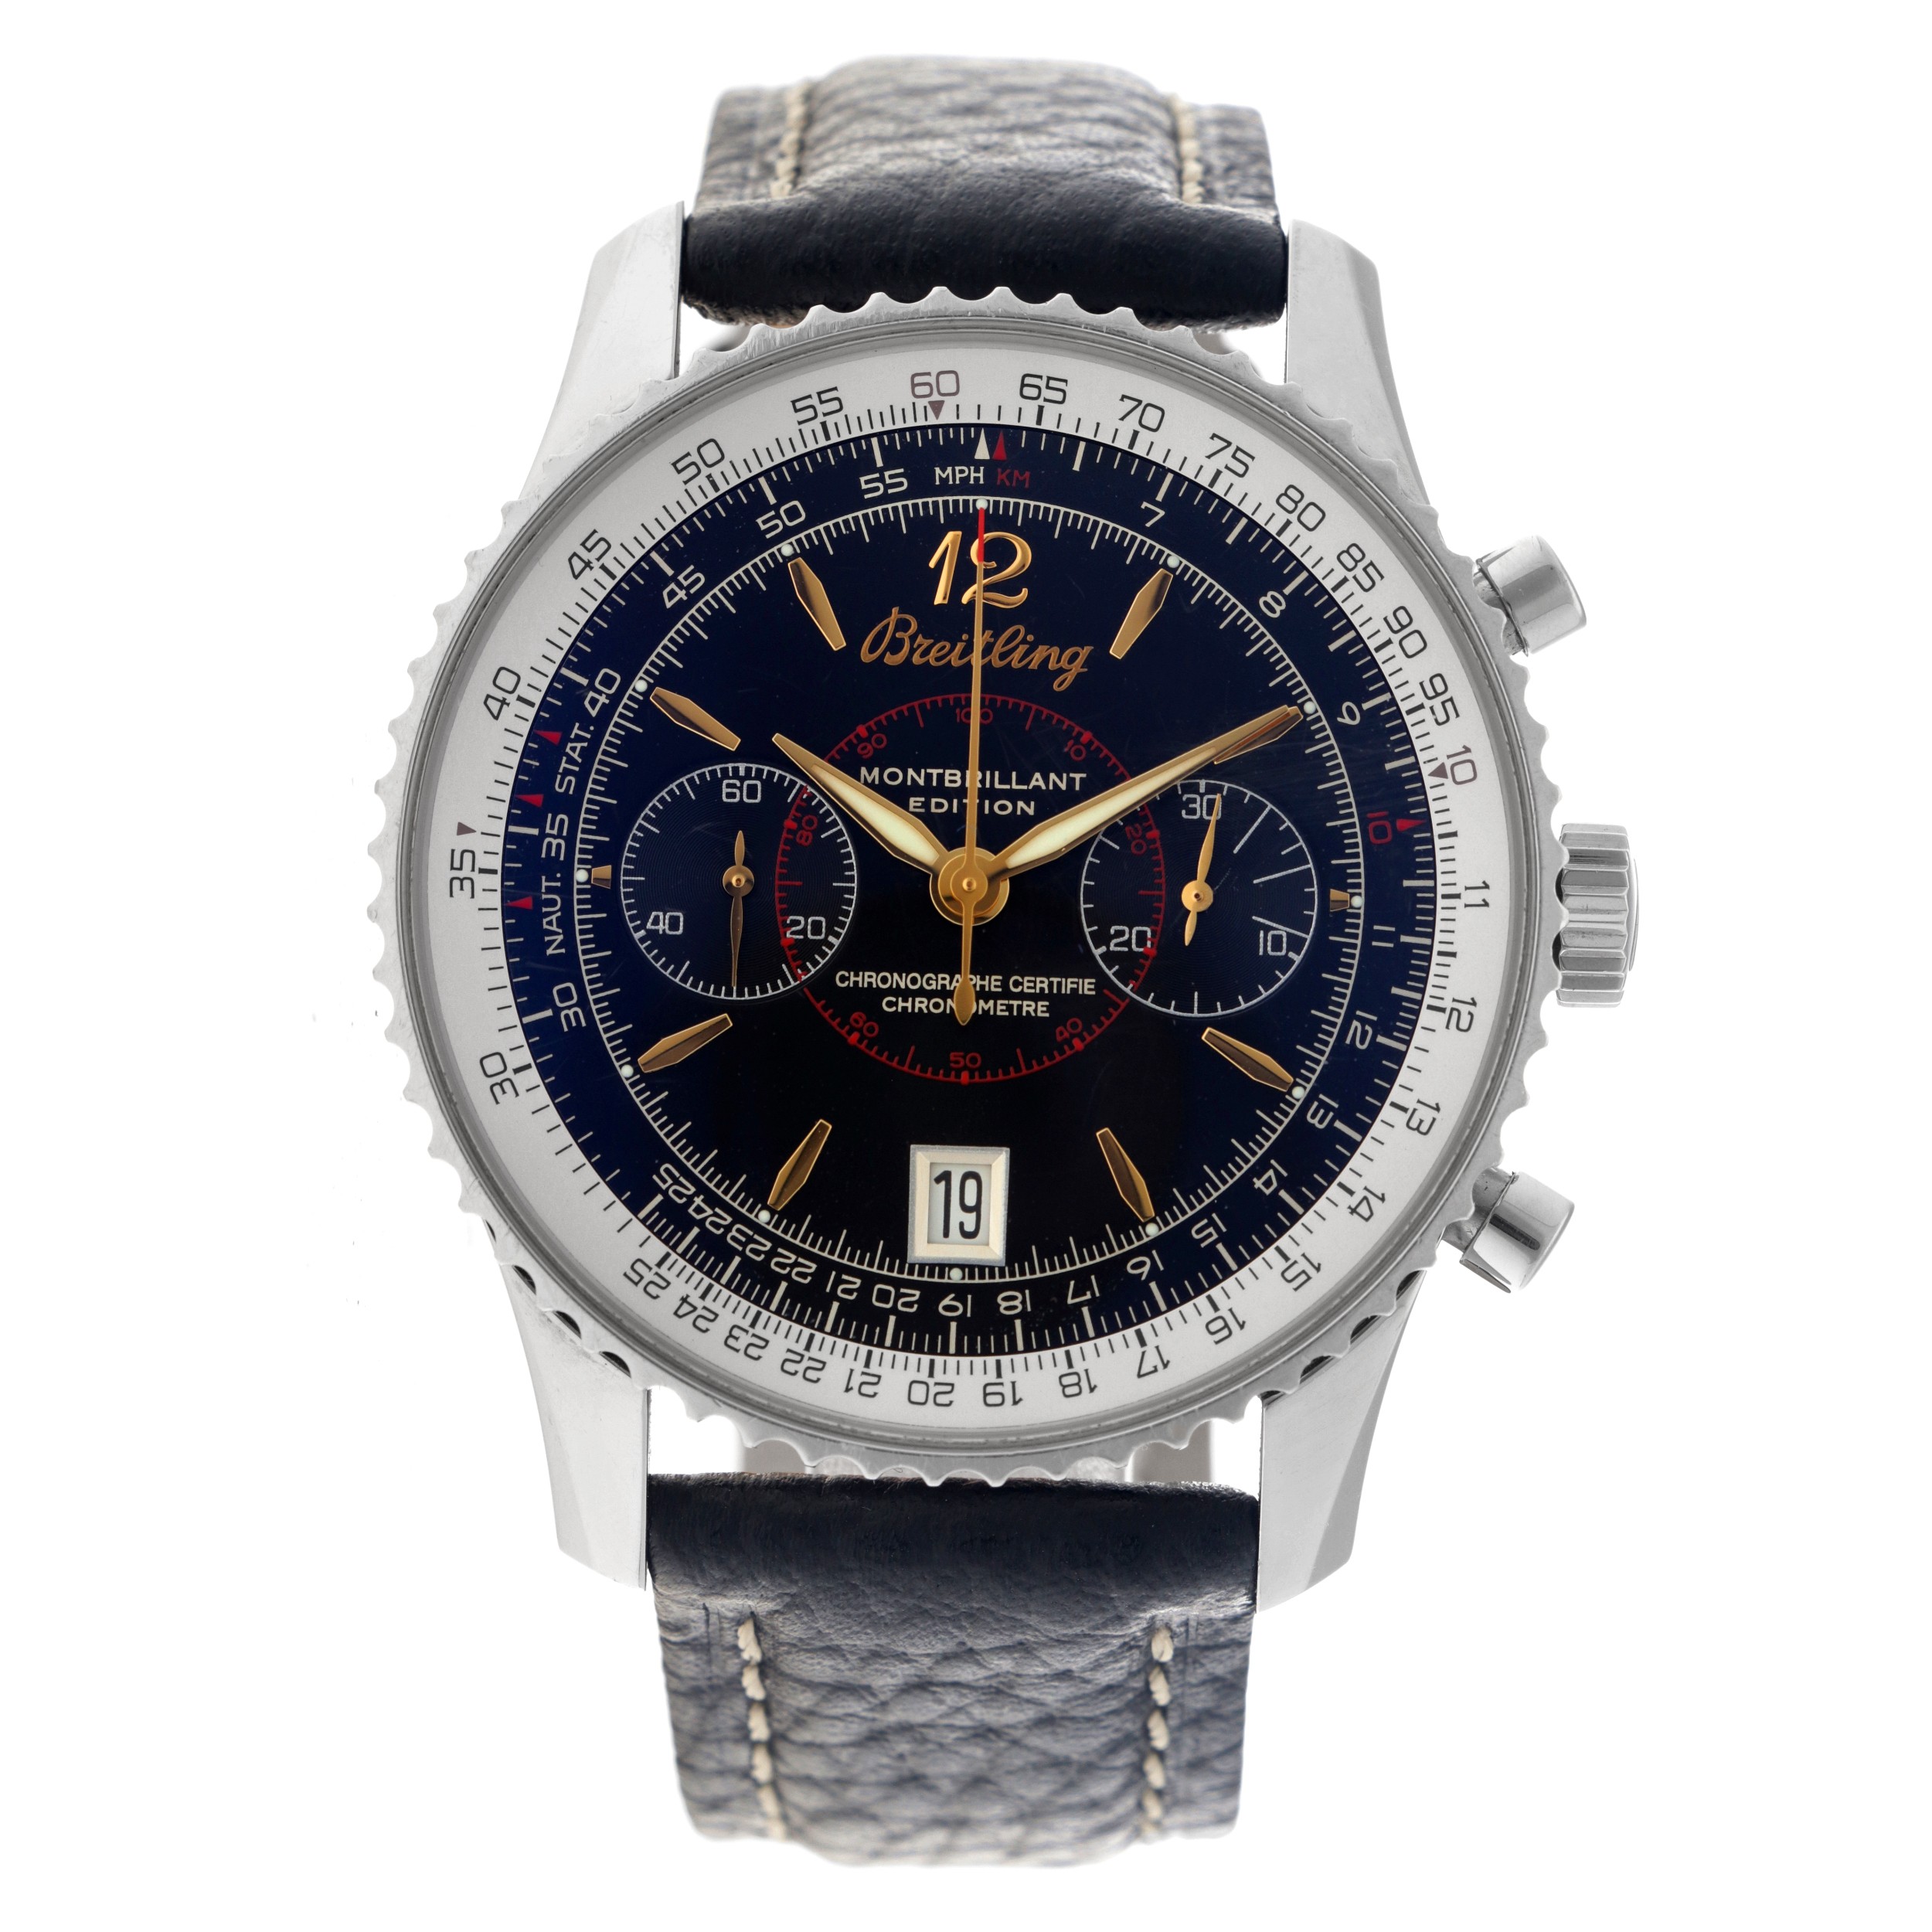 No Reserve - Breitling Navitimer Montbrilliant A48330 - Men's watch - 2006.